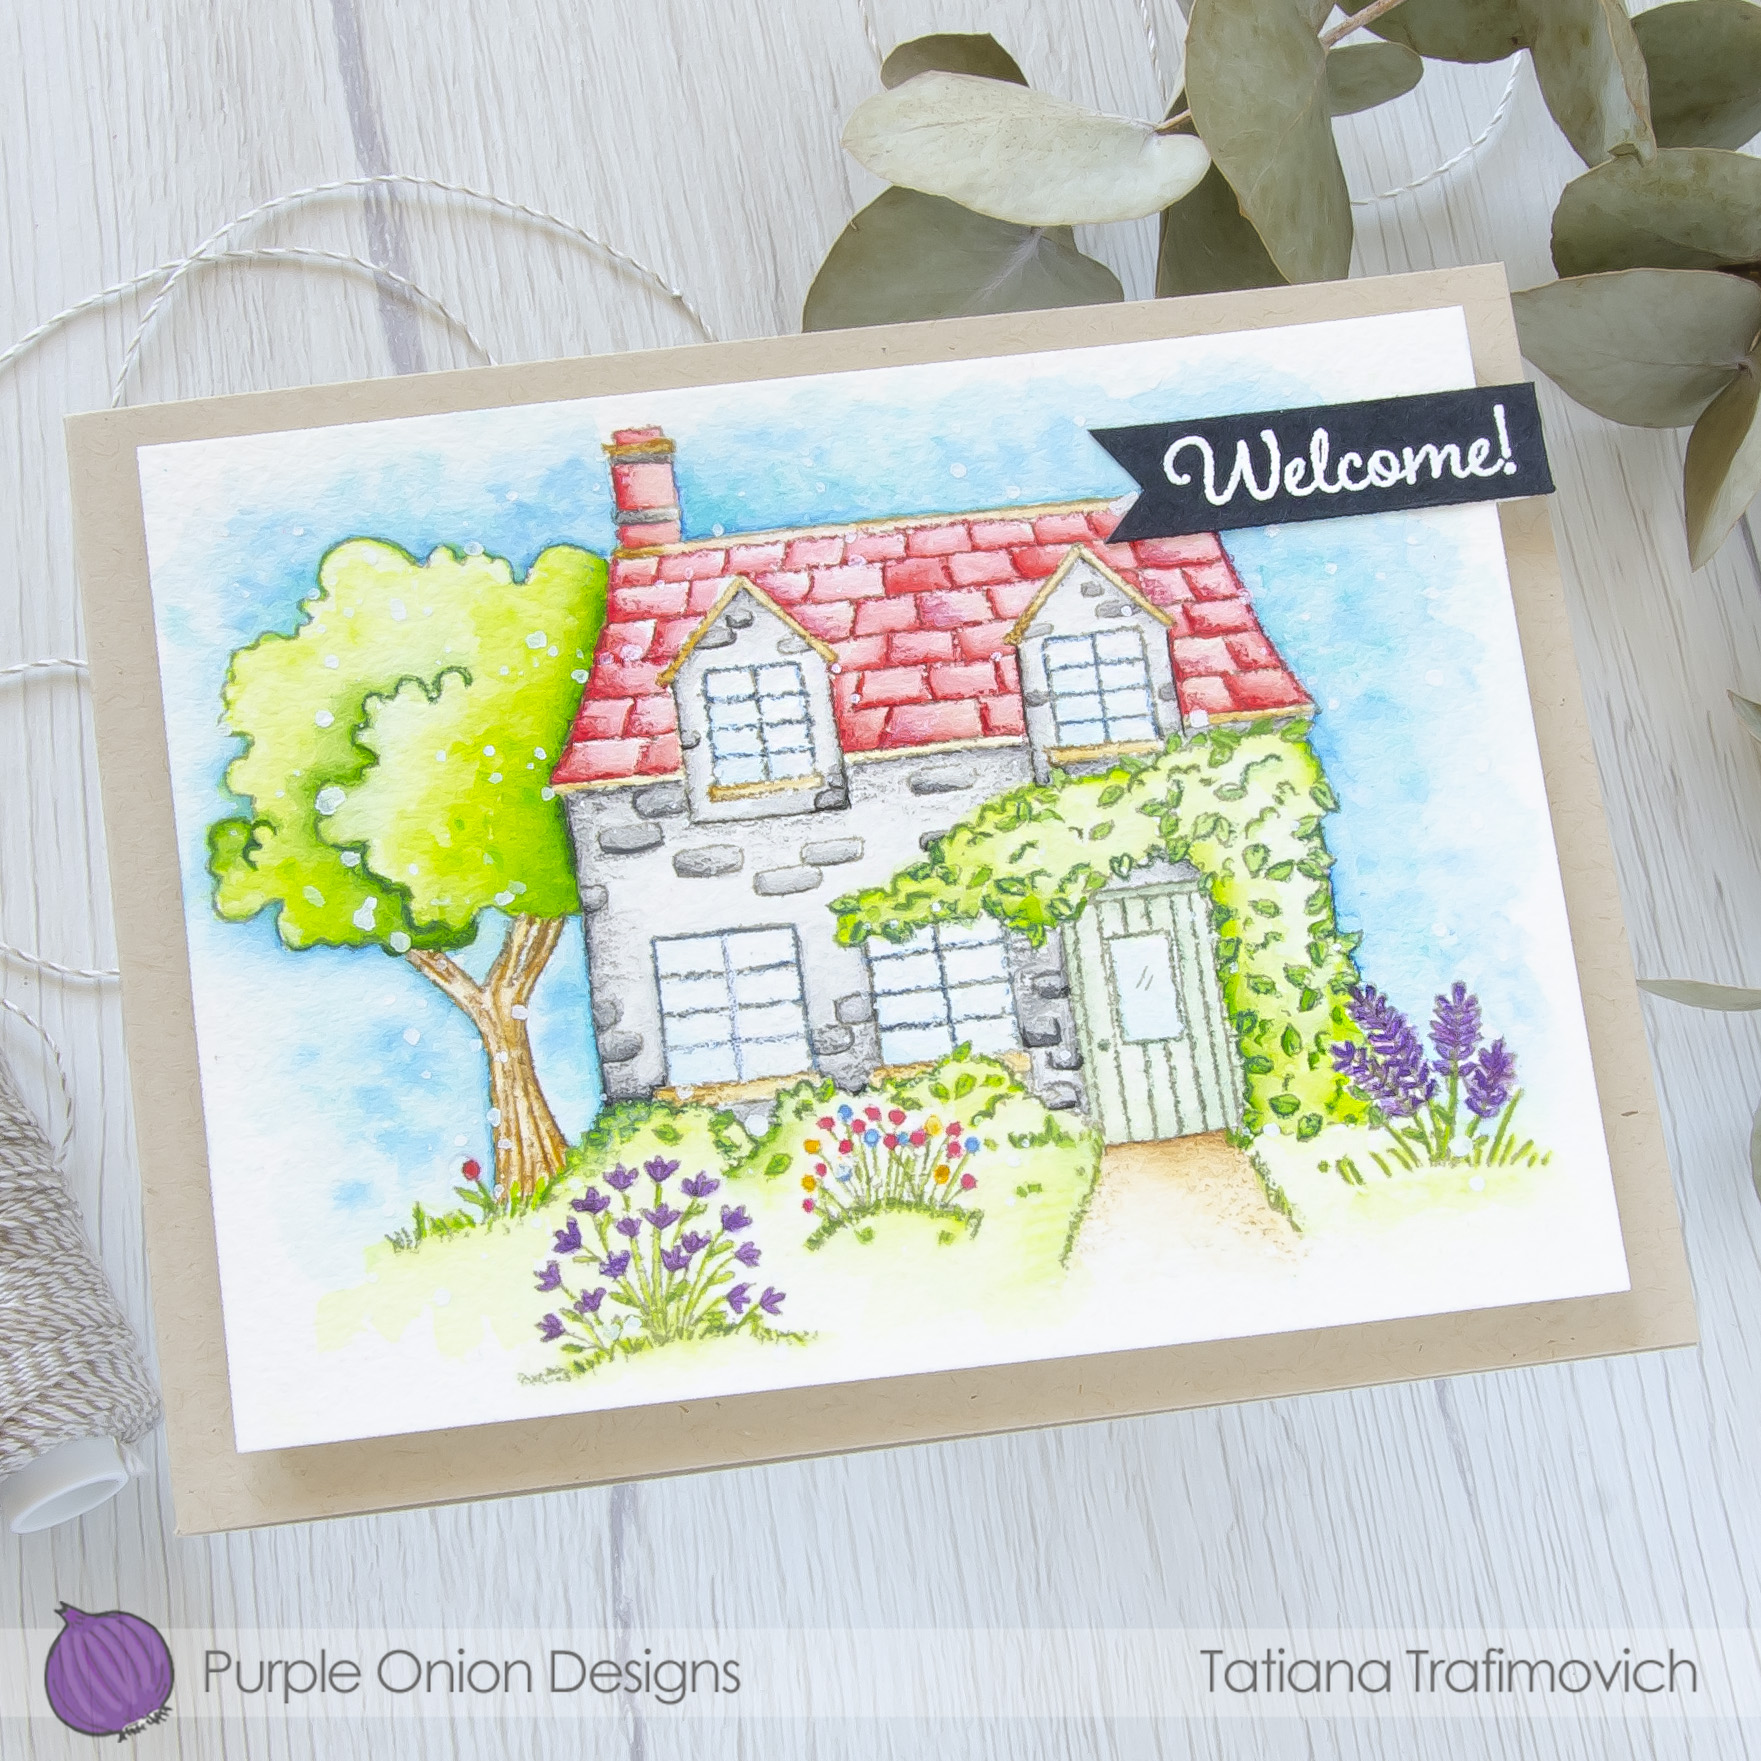 Welcome #handmade card by Tatiana Trafimovich #tatianacraftandart - stamps by Purple Onion Designs